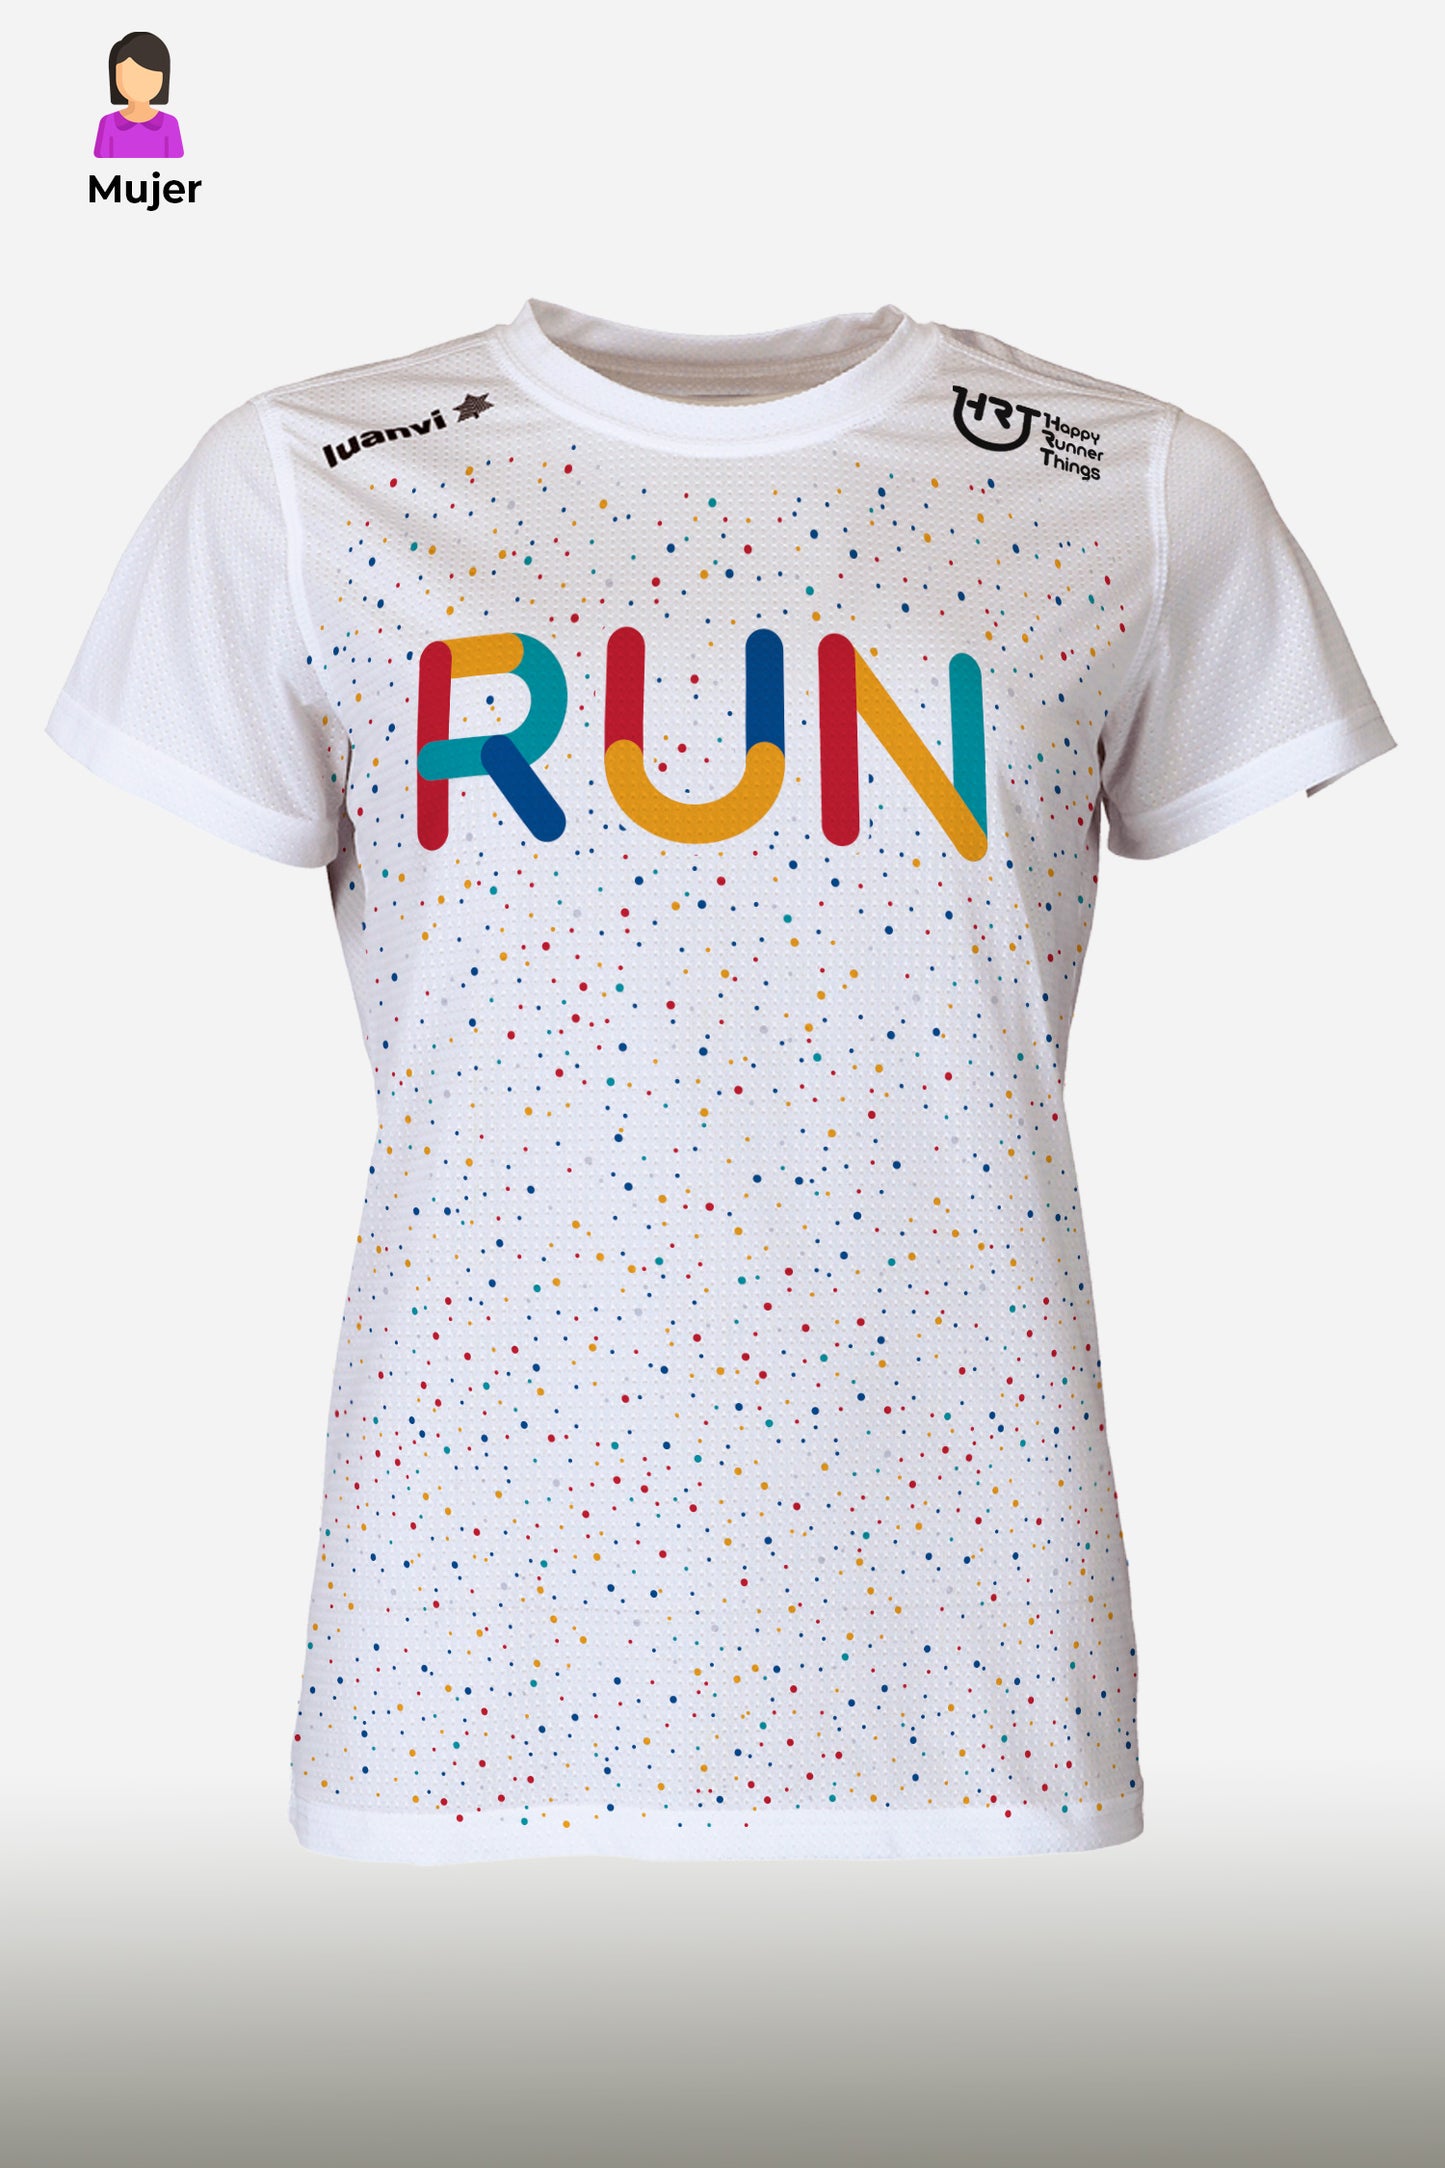 Hashtag - Camiseta Running Mujer - Naranja